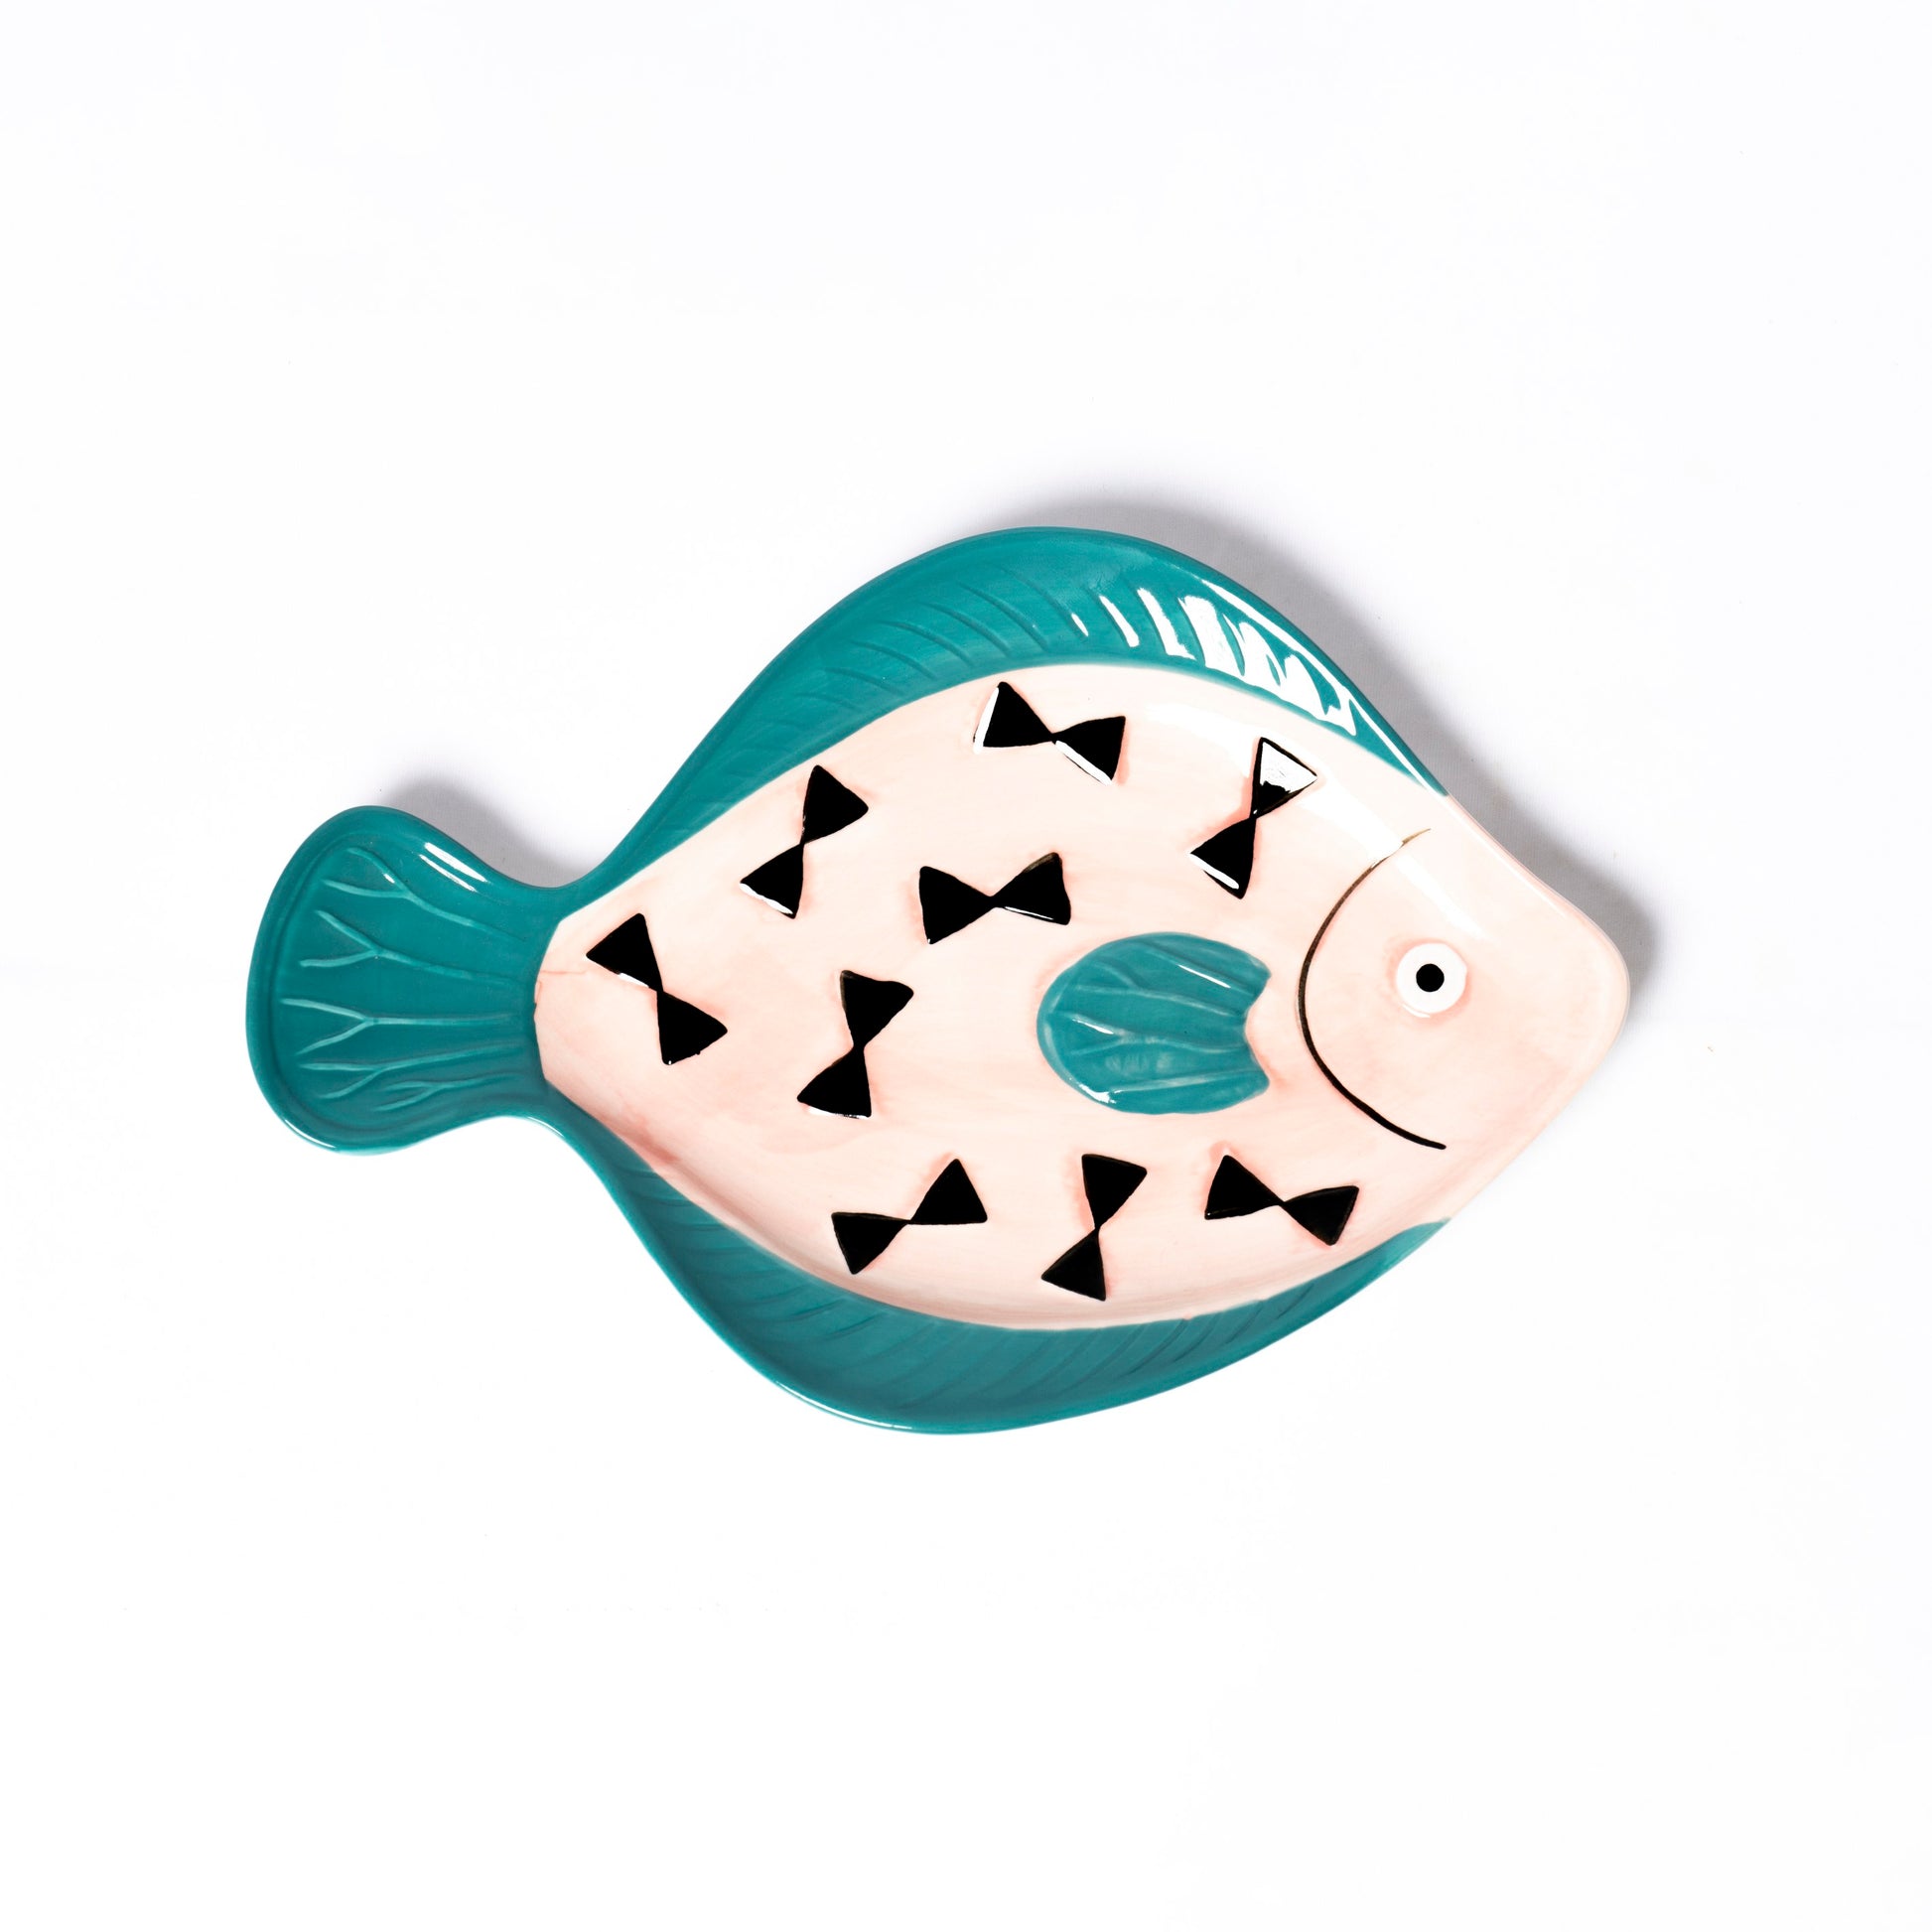 Ceramic Serving Plate - Fish Design - SPCR0006 - View 1